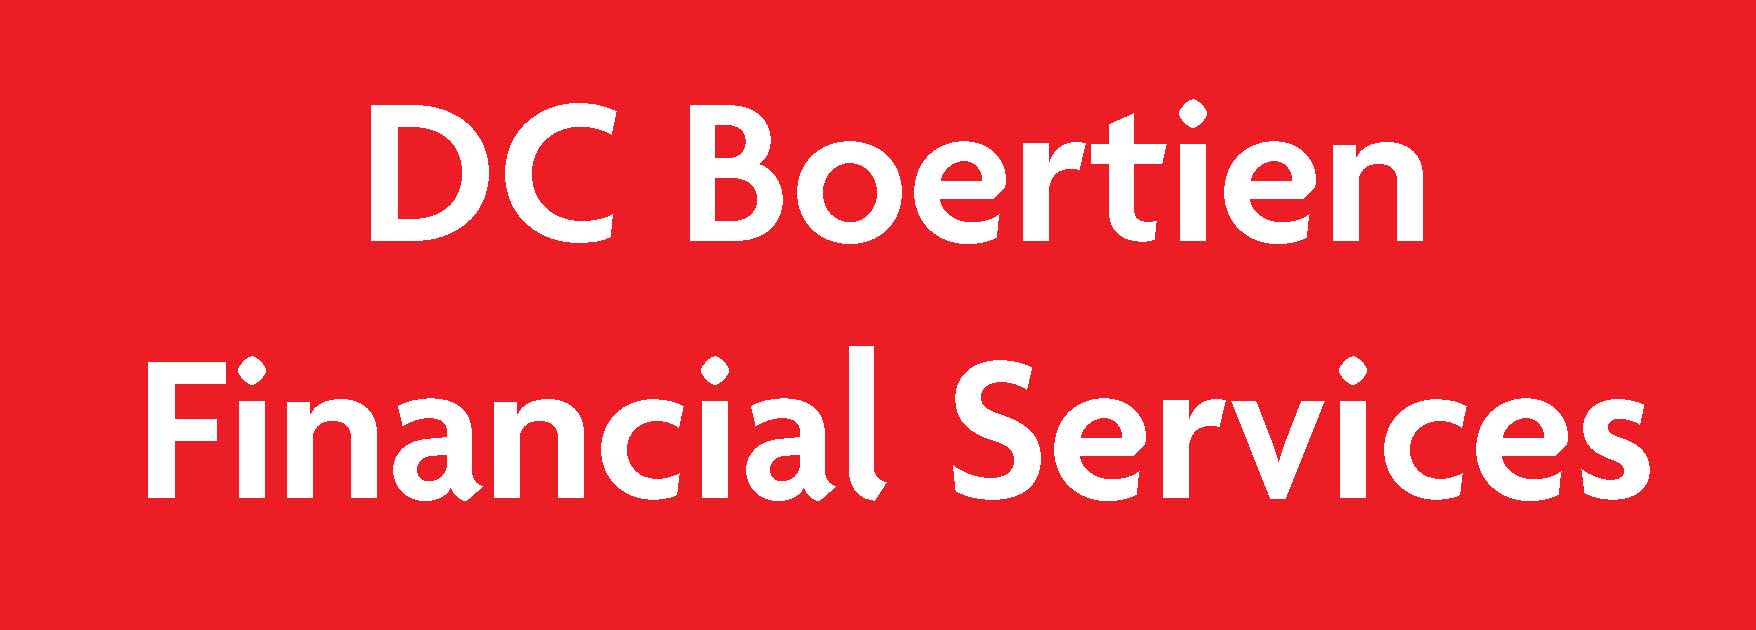 DC Boertien Financial Services